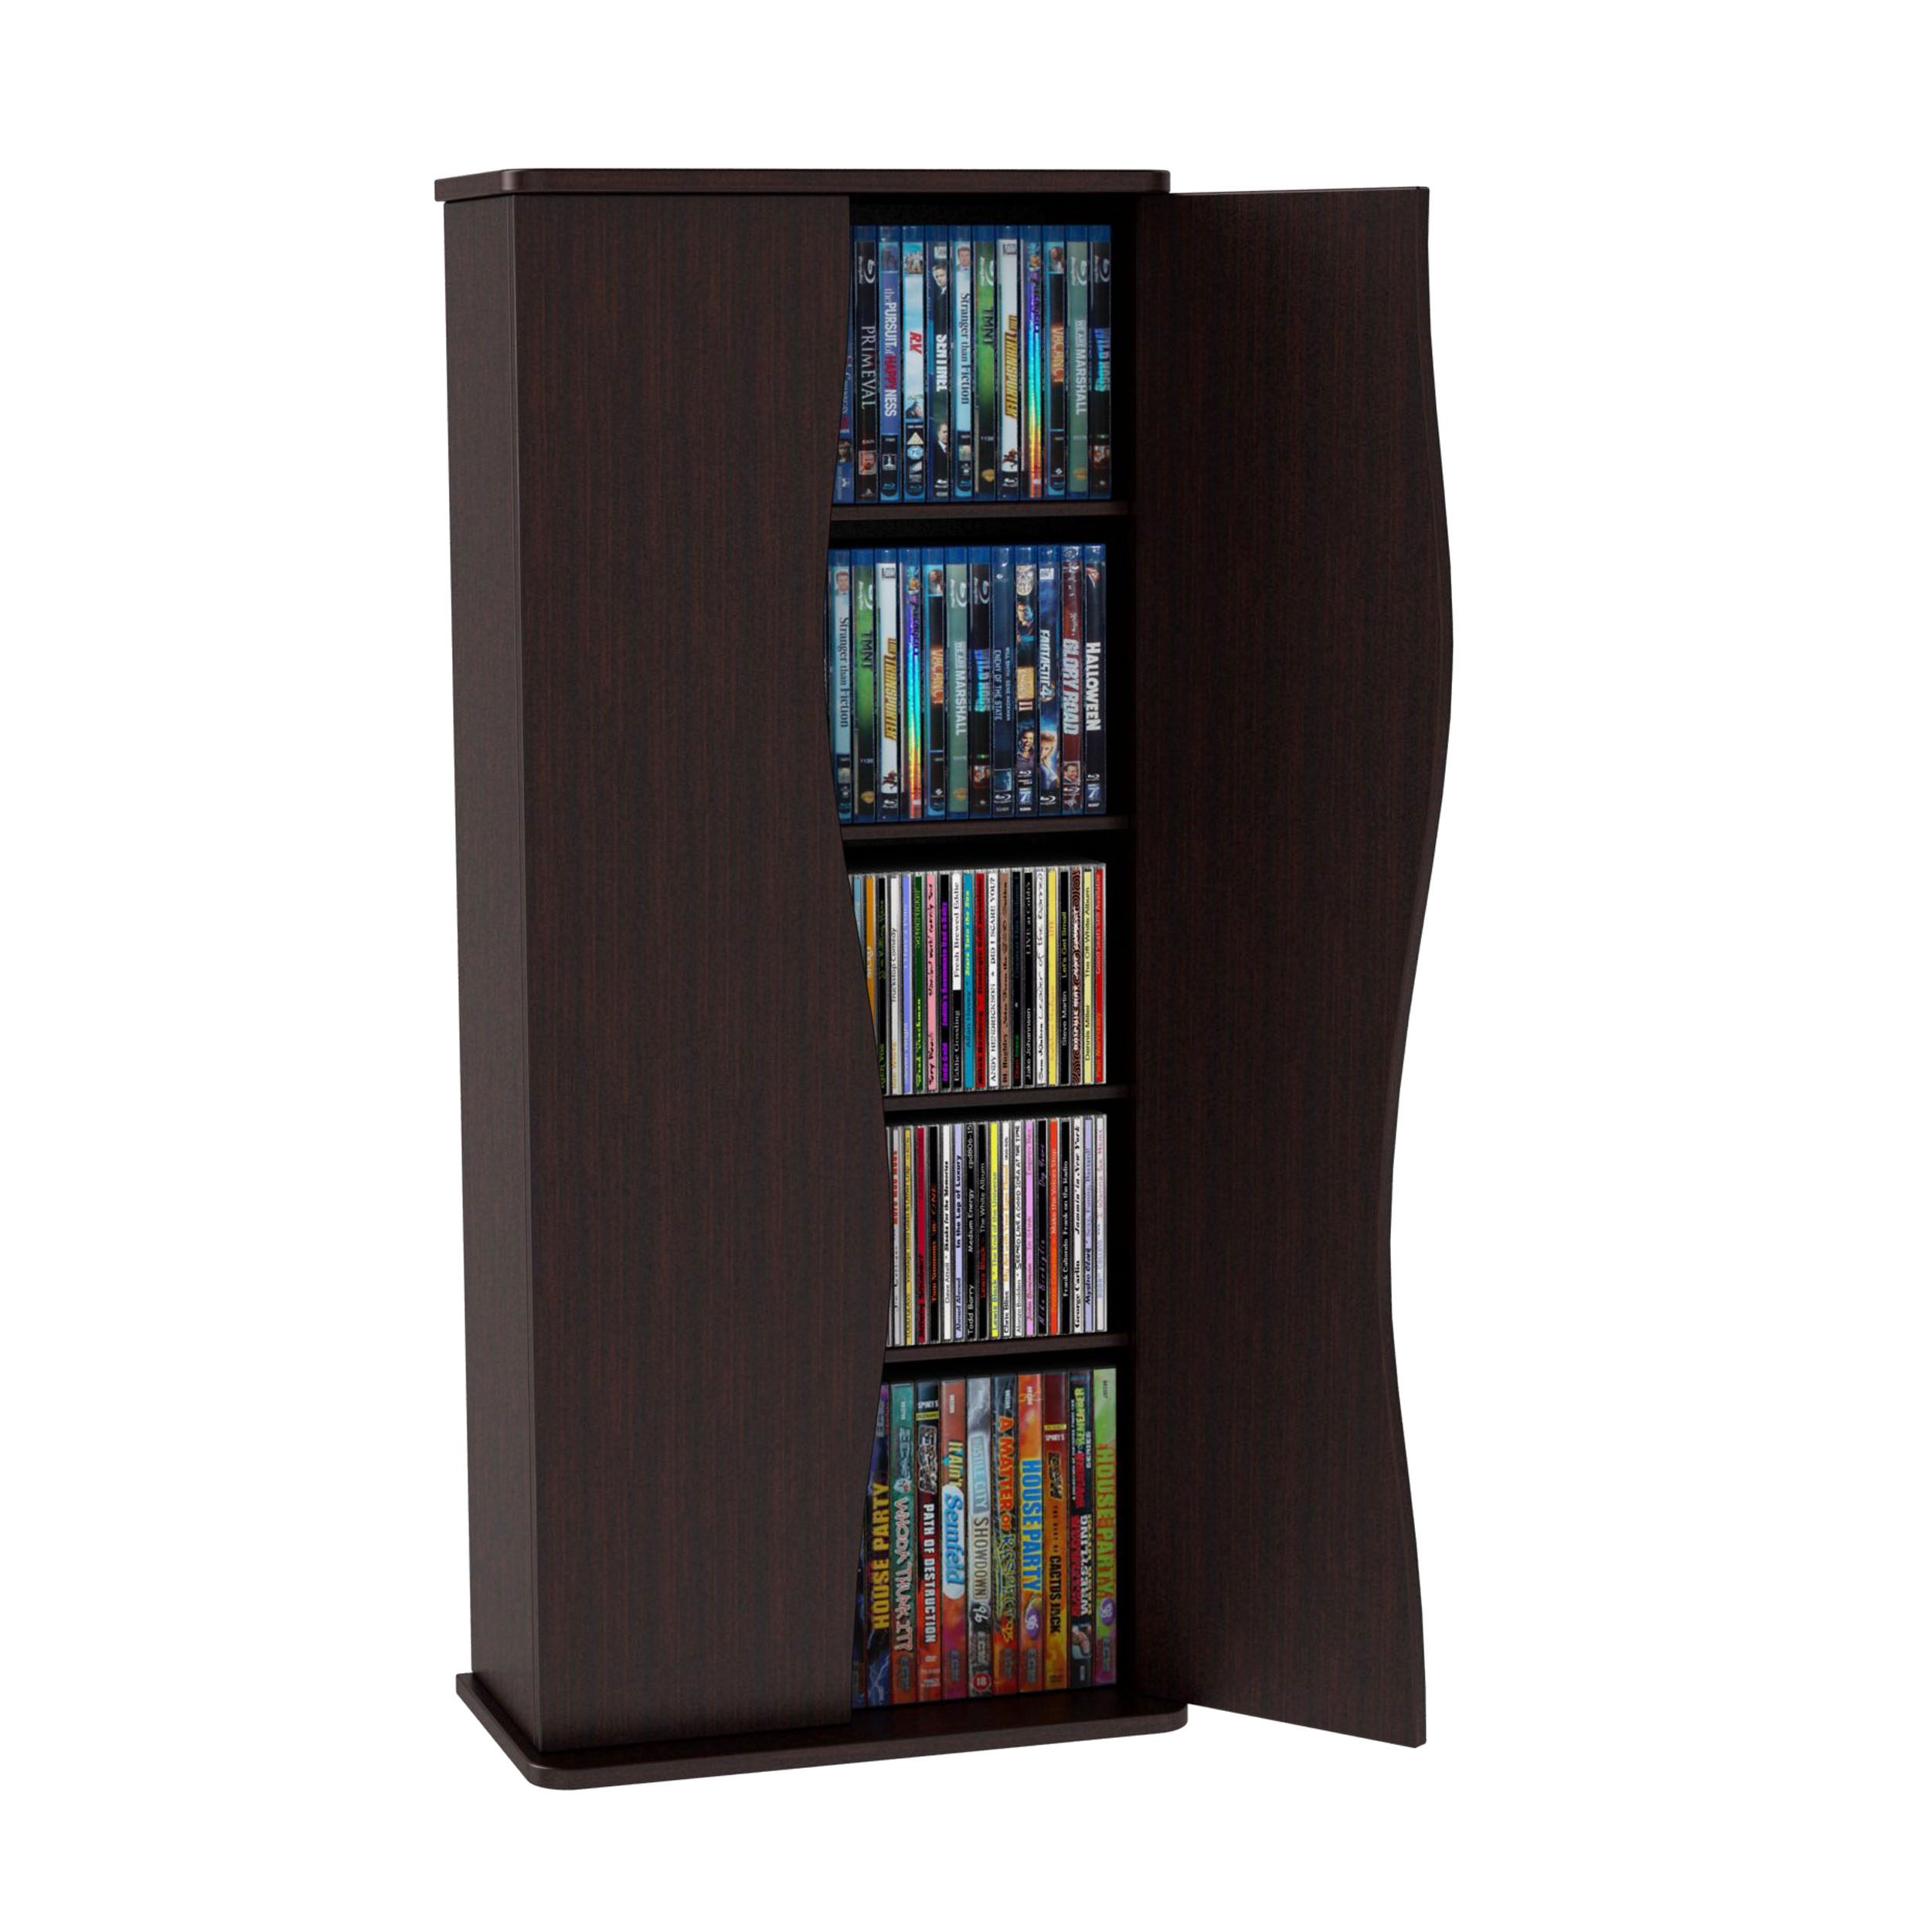 Atlantic 35" Venus Small 6-Shelf Media Storage Shelf & Cabinet (198 CDs, 88 DVDs, 125 BluRays), Espresso - image 5 of 7